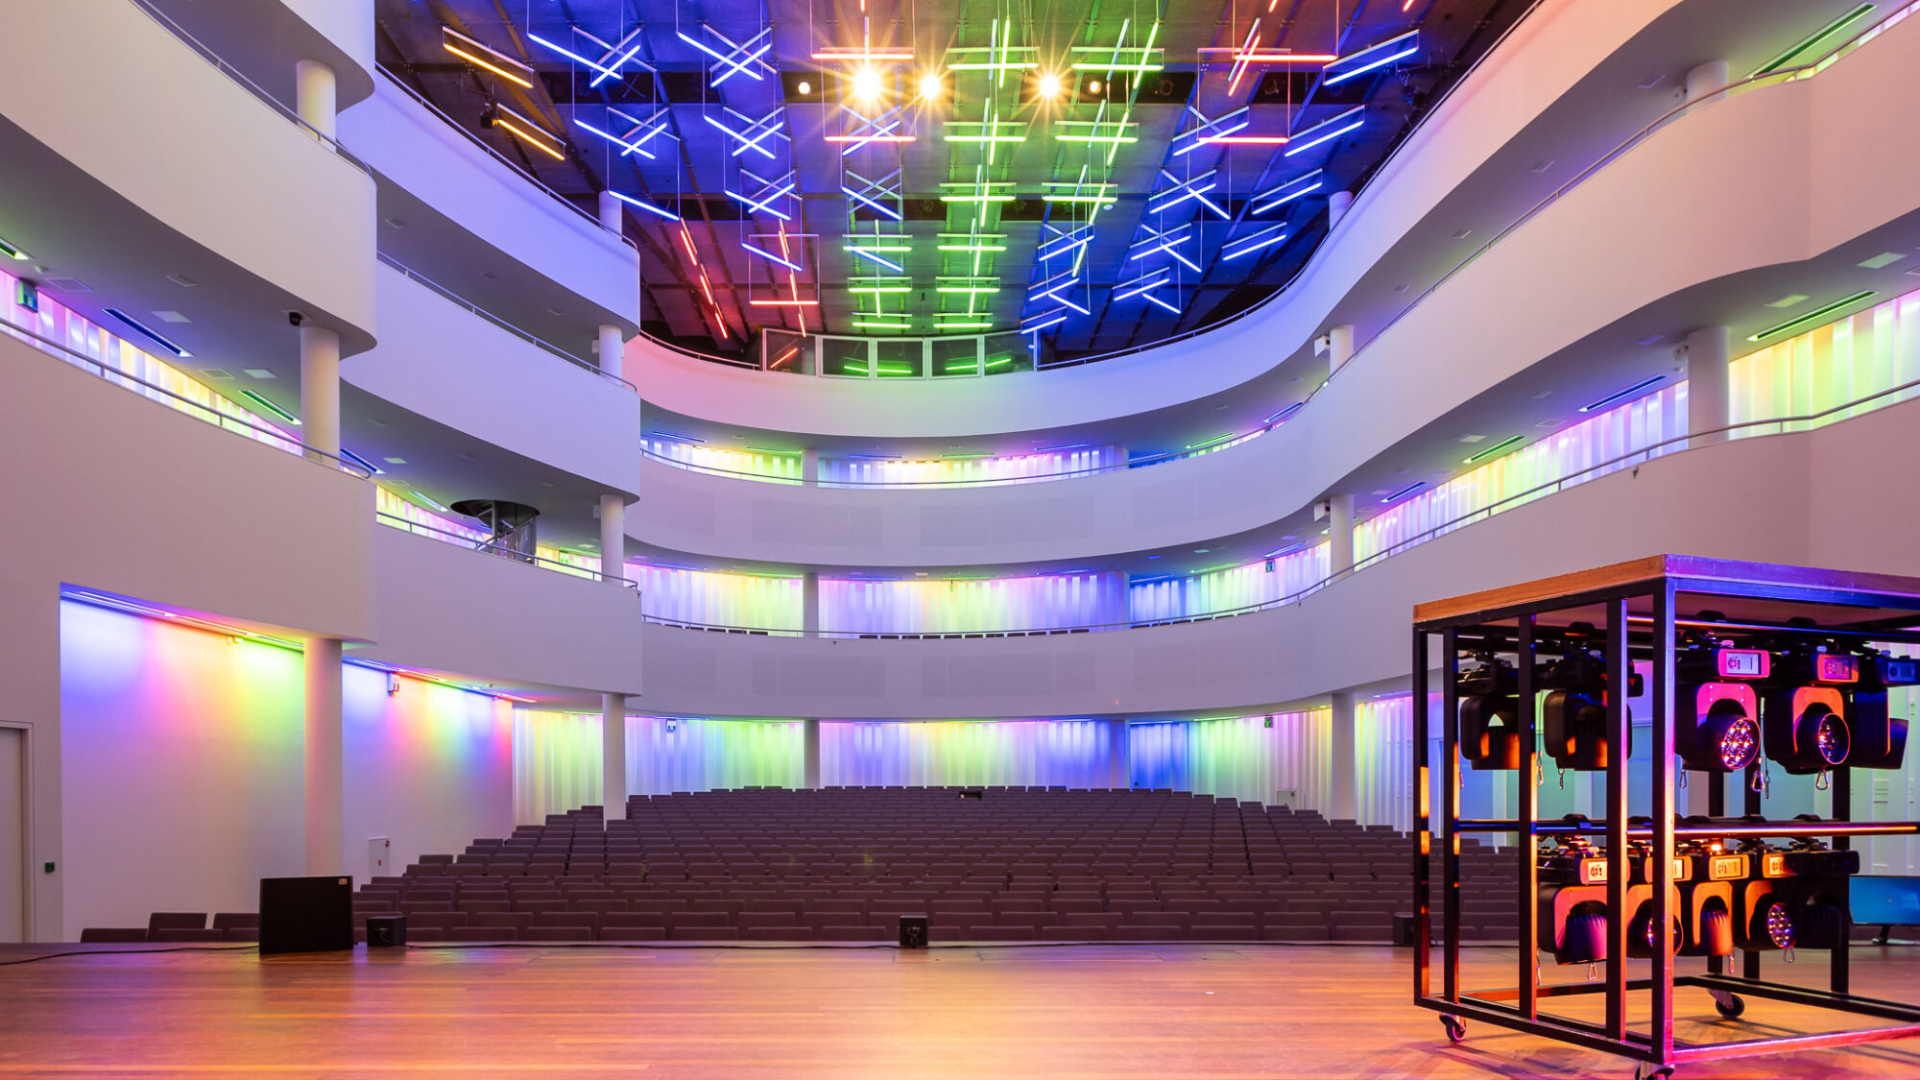 PROLIGHTS Illuminates the Concert Hall Theater in Tilburg
